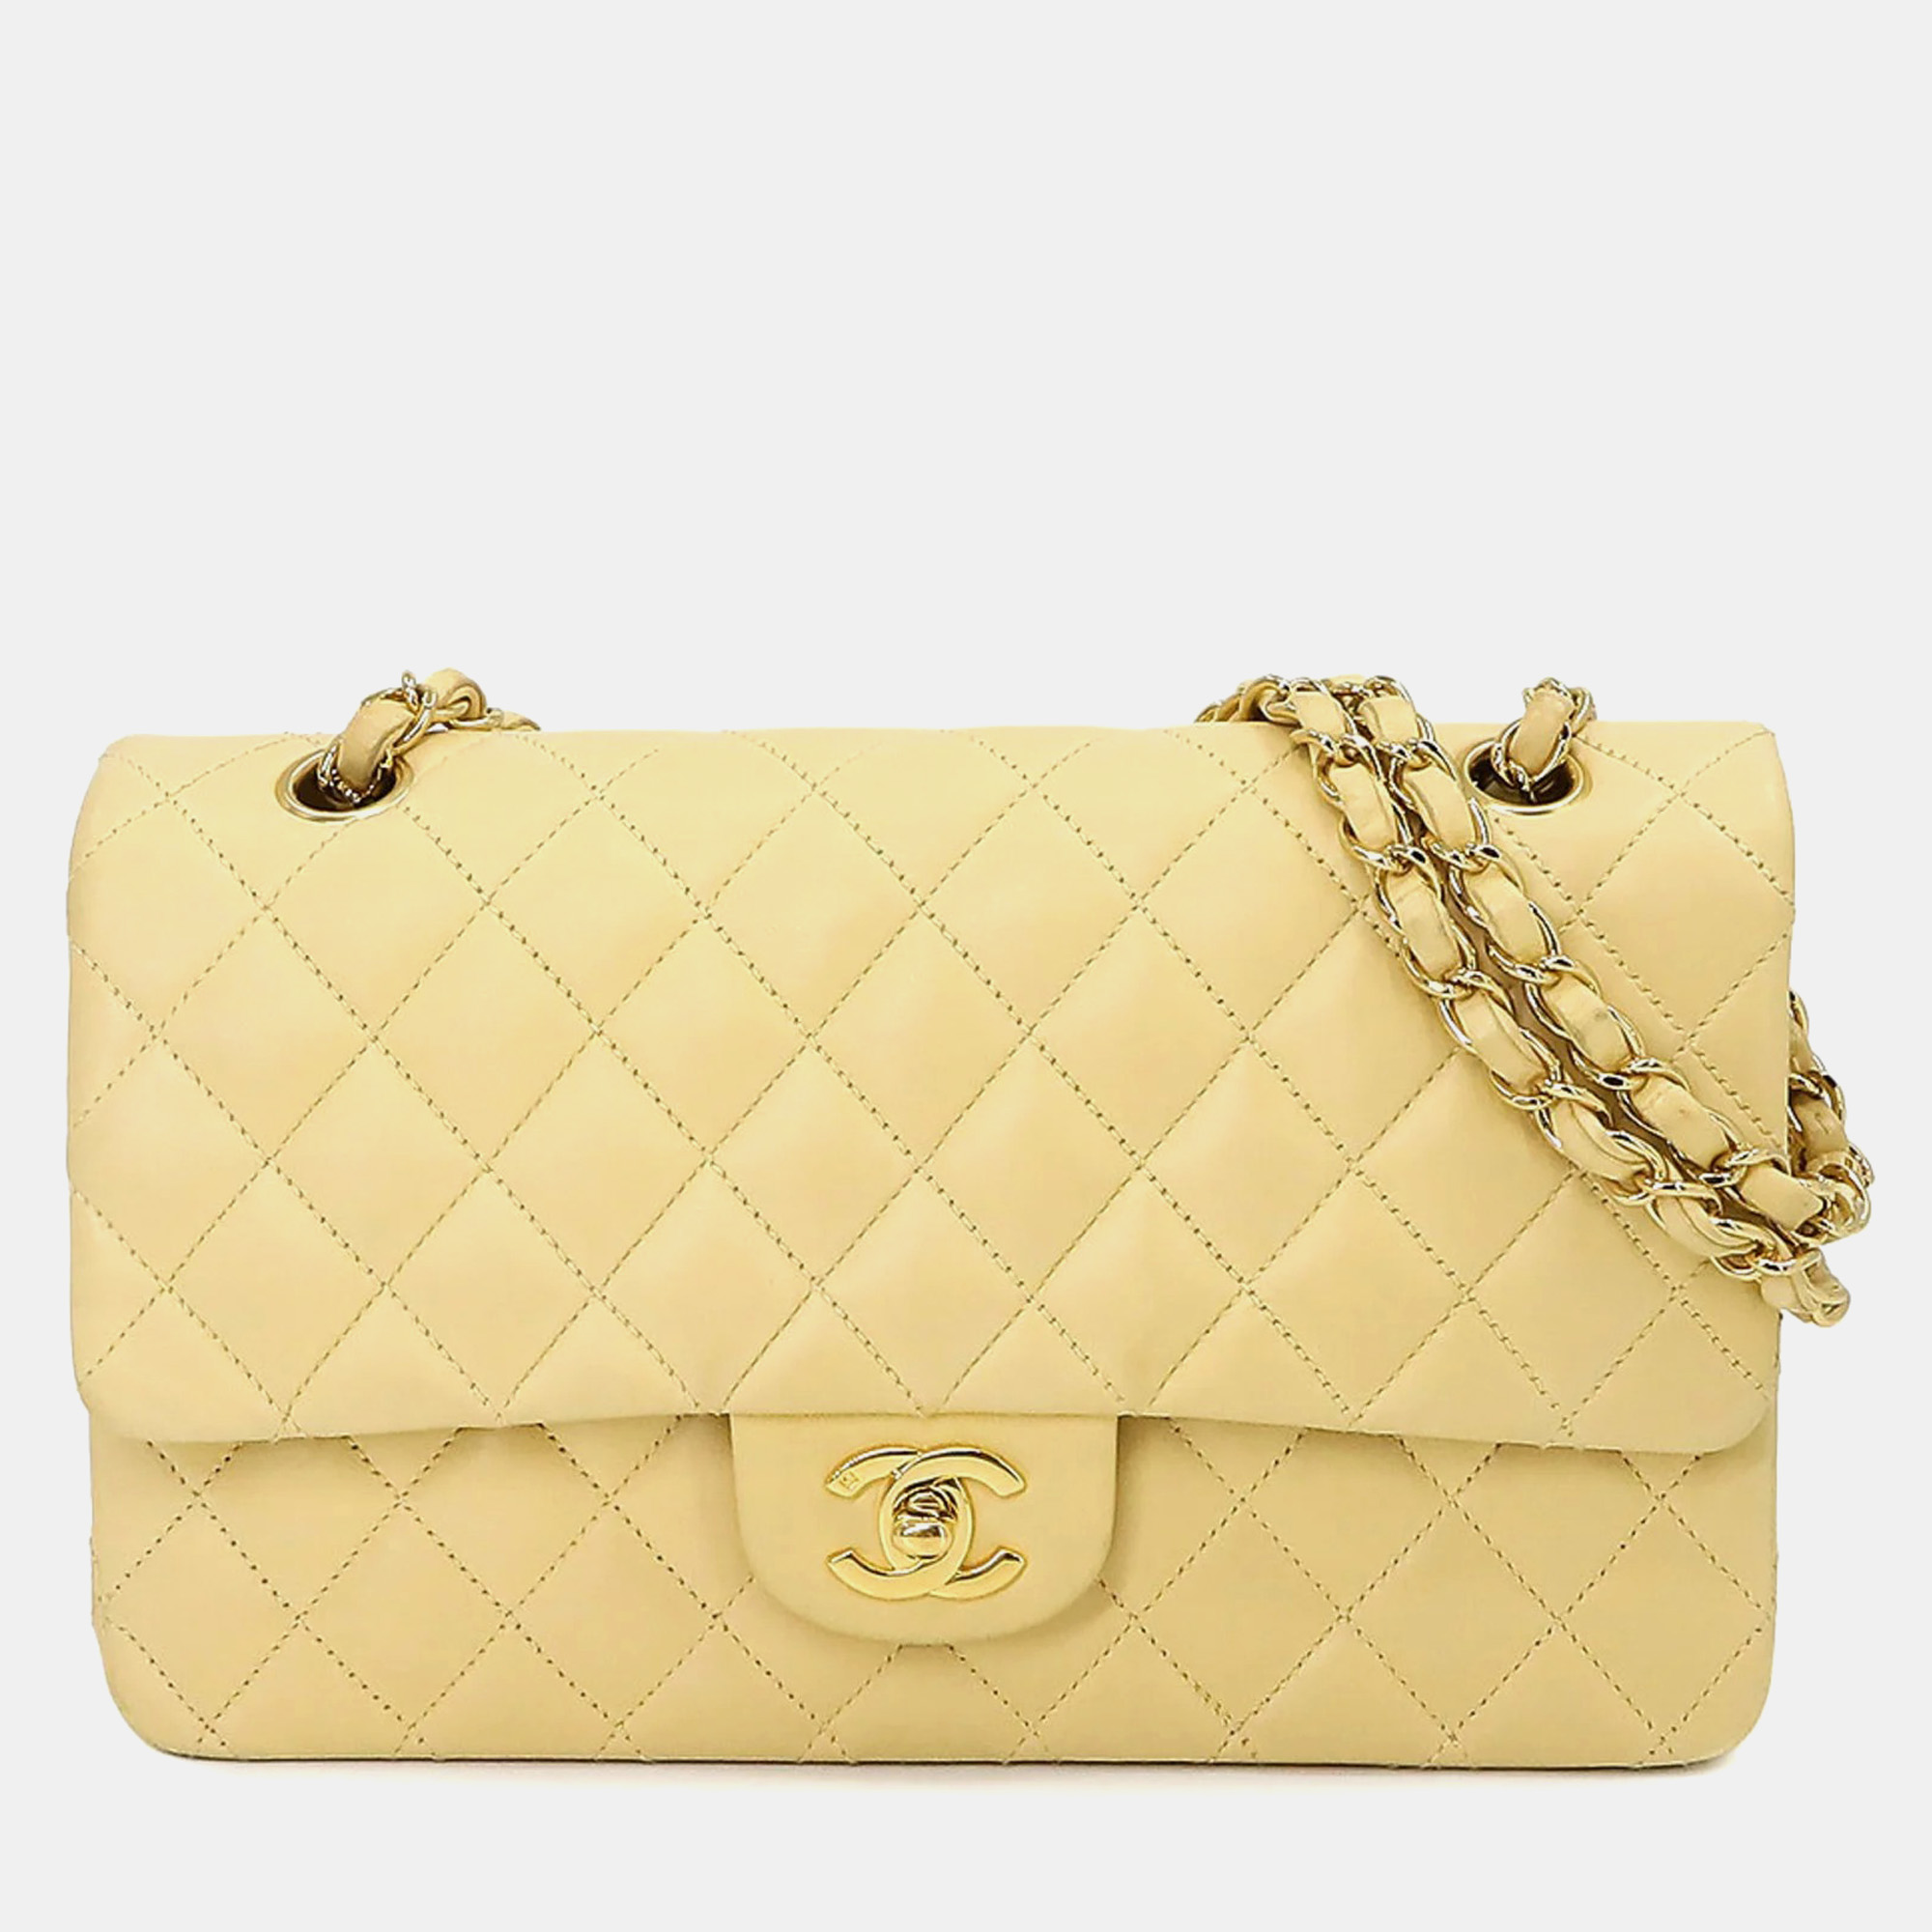 Chanel beige lambskin leather medium classic double flap shoulder bag